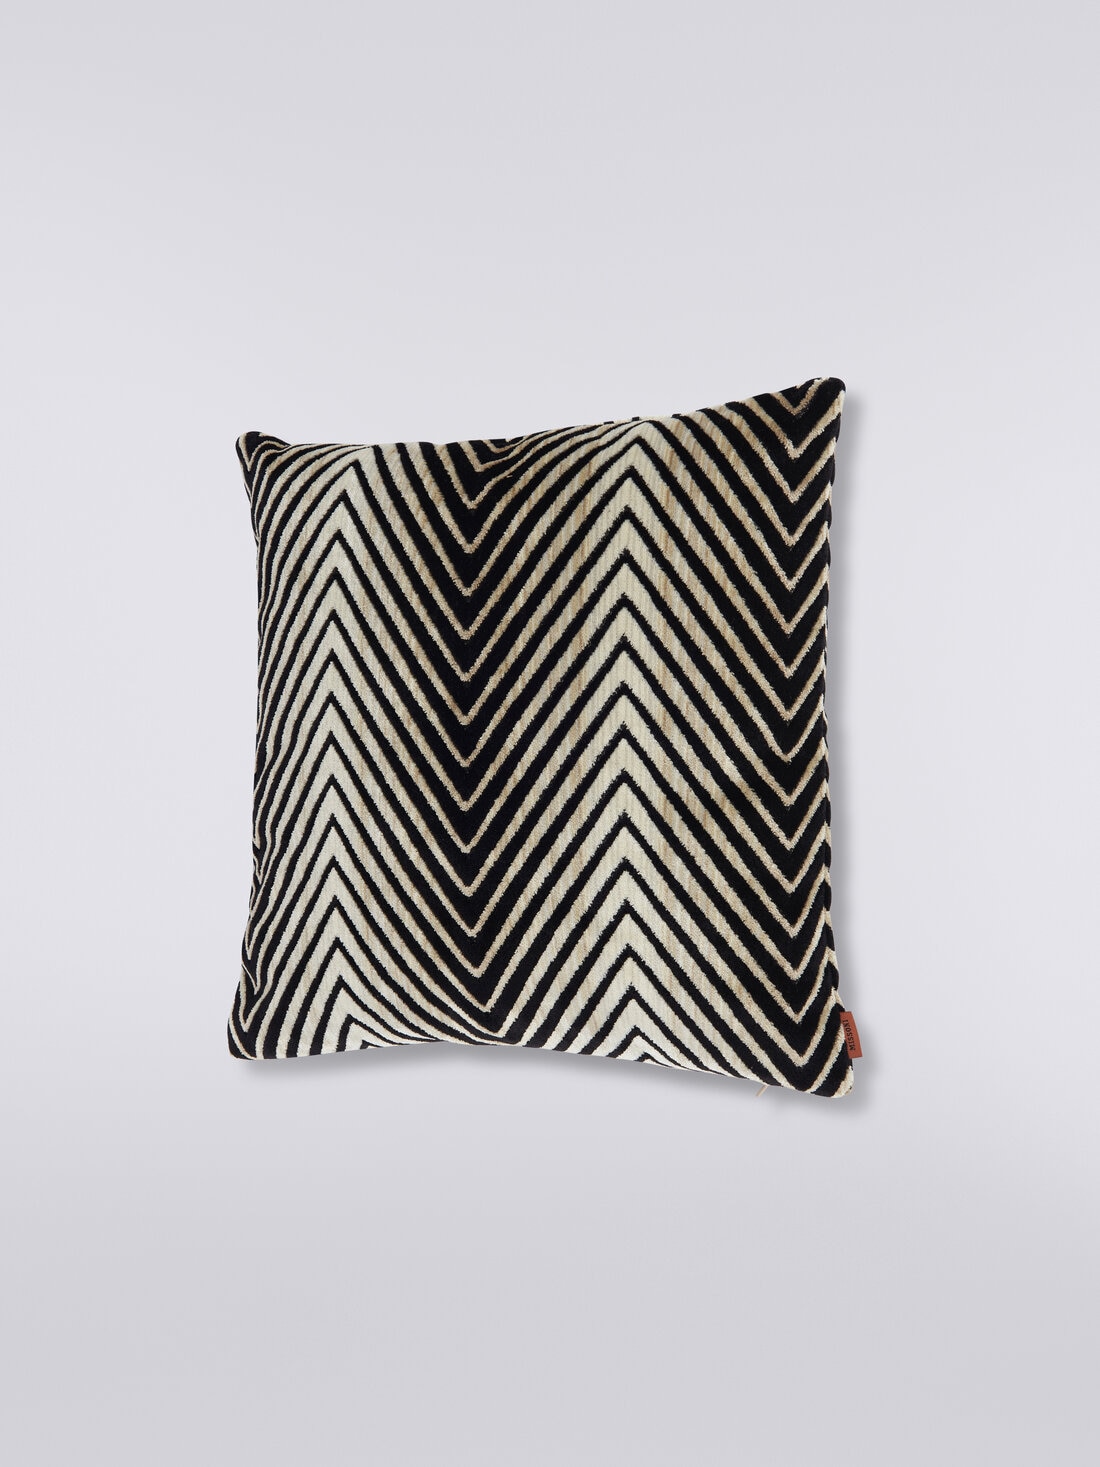 Ziggy 40x40 cm viscose blend zigzag cushion, Black & White - 8051575831270 - 1